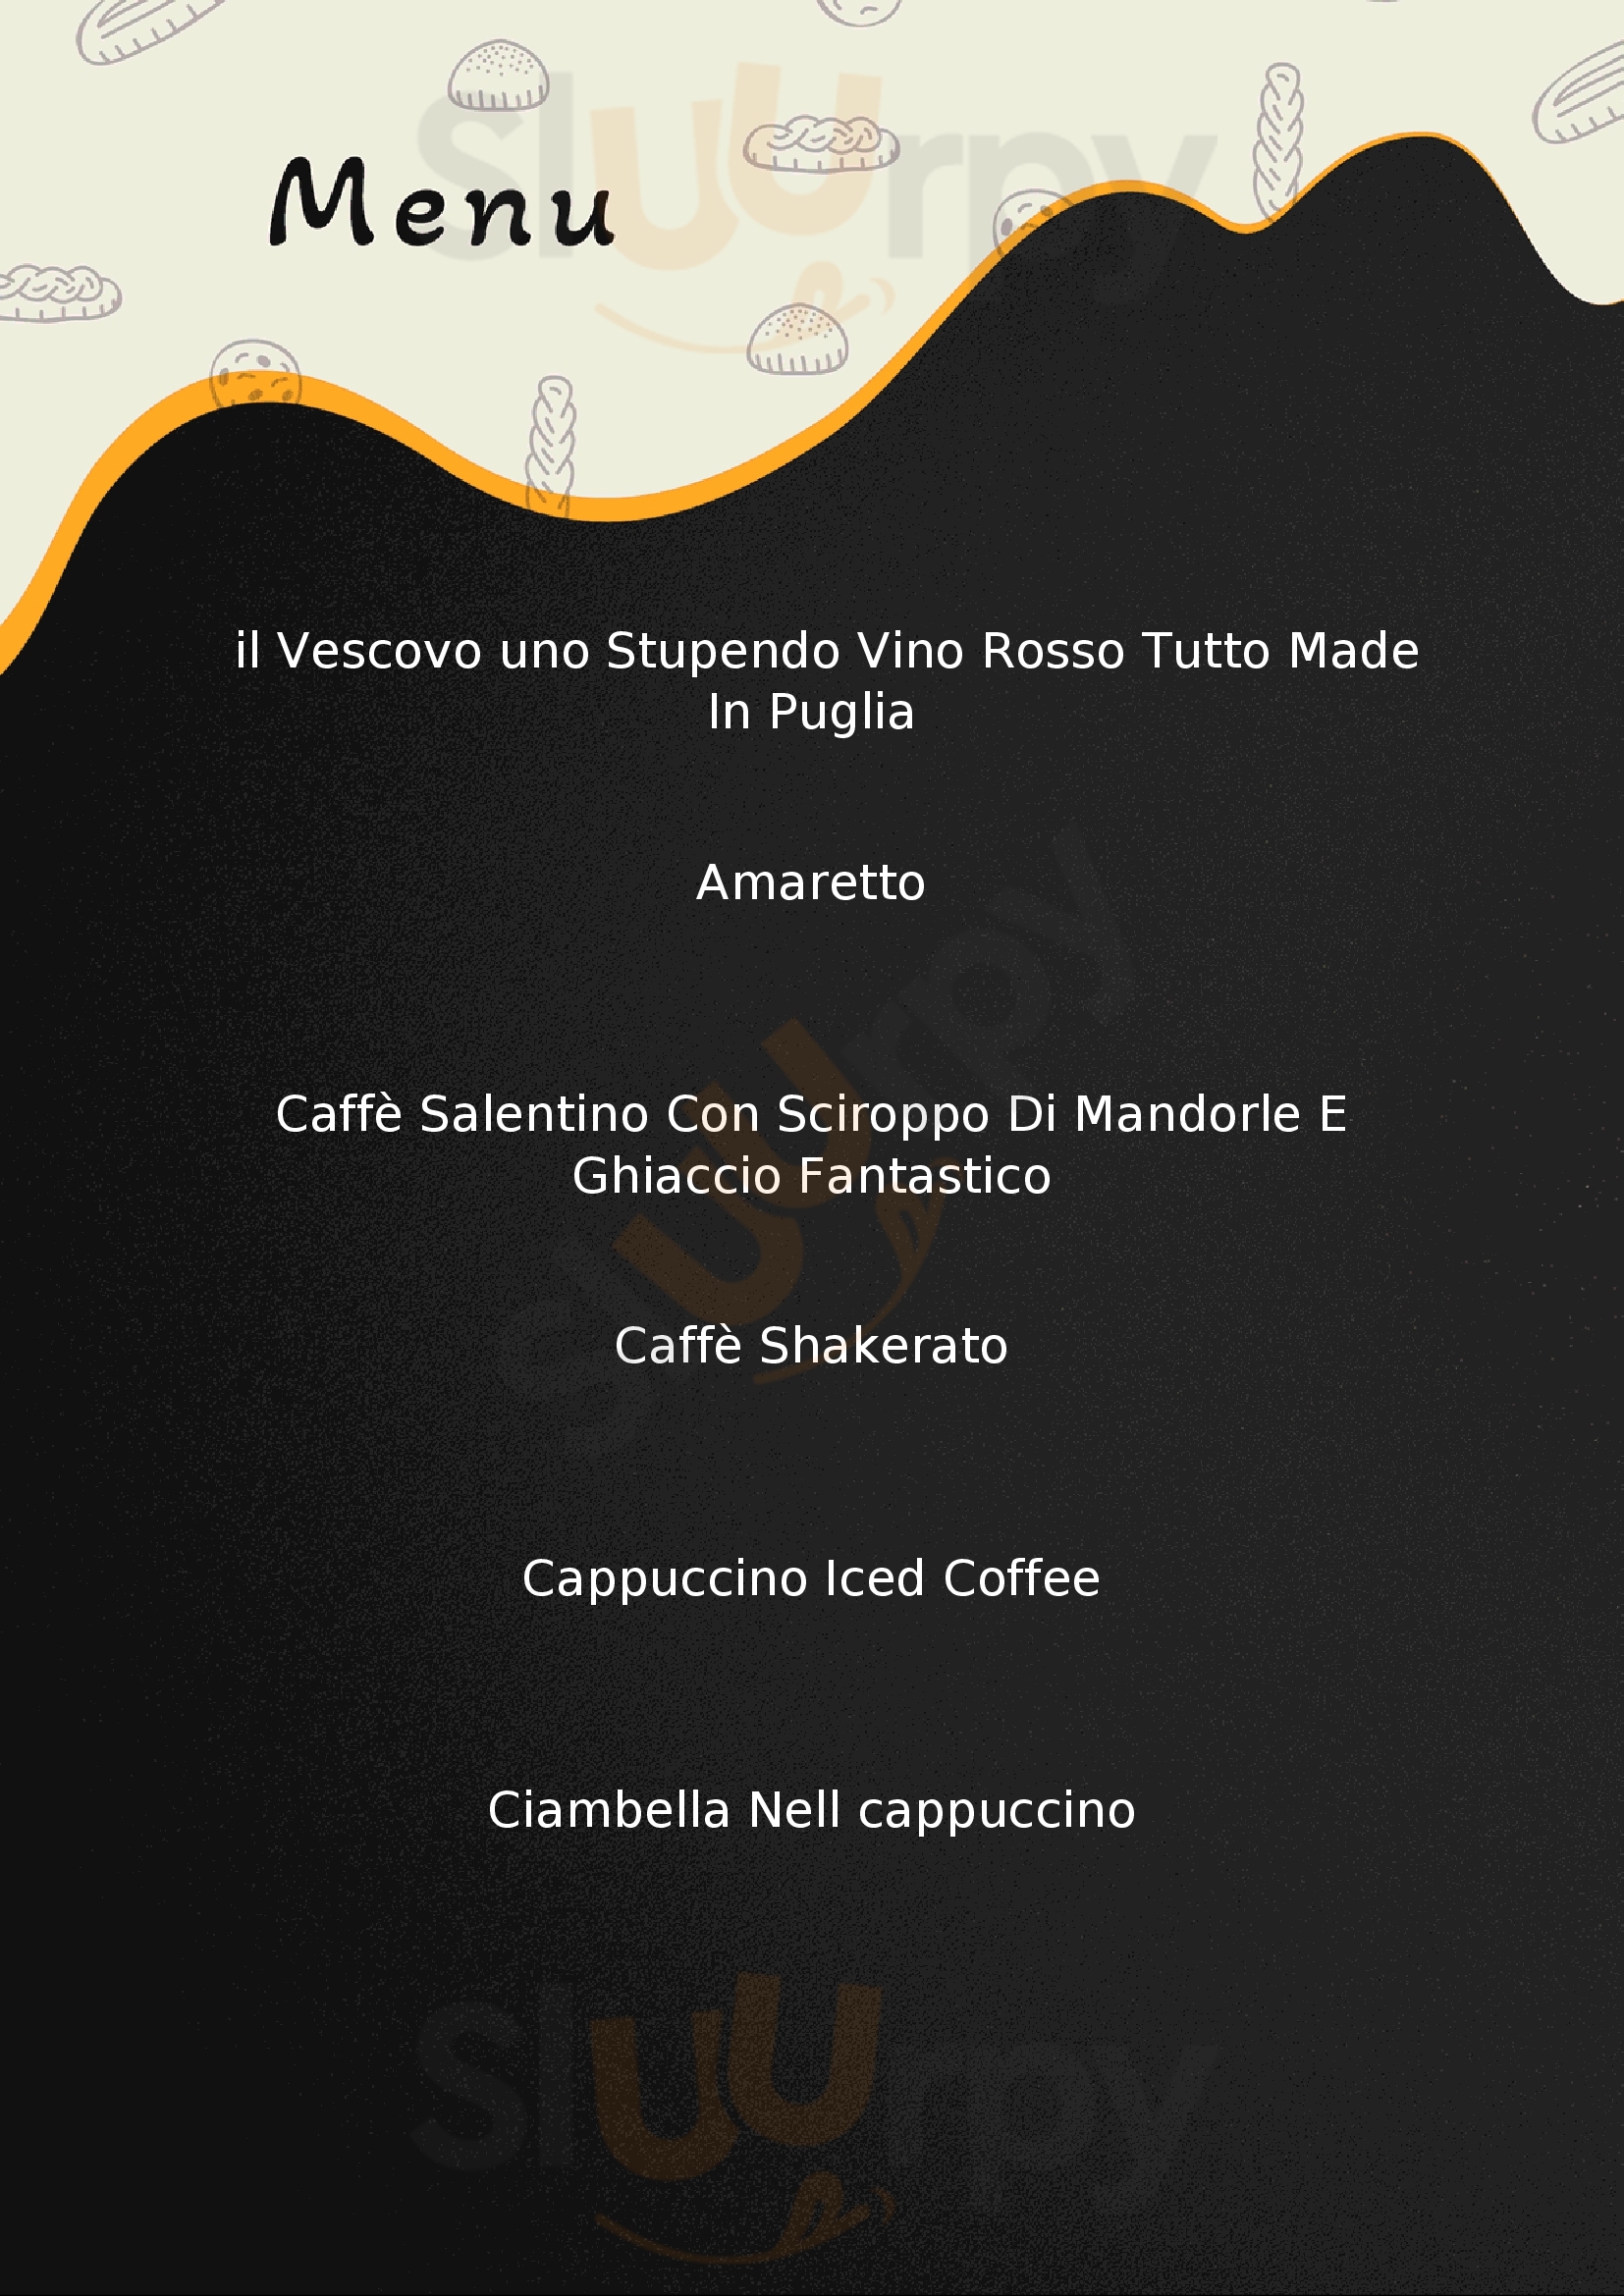 Veronero Caffe' Bari menù 1 pagina